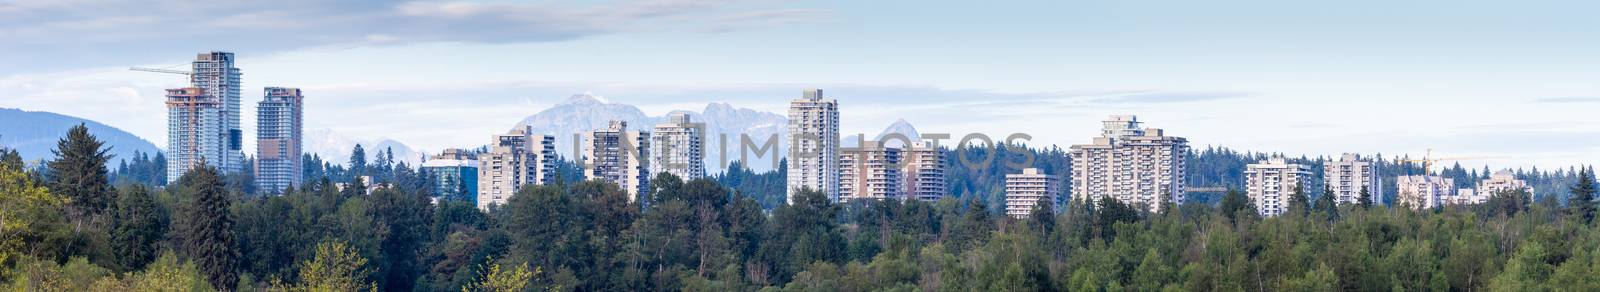 Panorama of the Burnaby, British Columbia, Canada apartment development skyline looking towards the Burnaby and Maple Ridge Mountains.